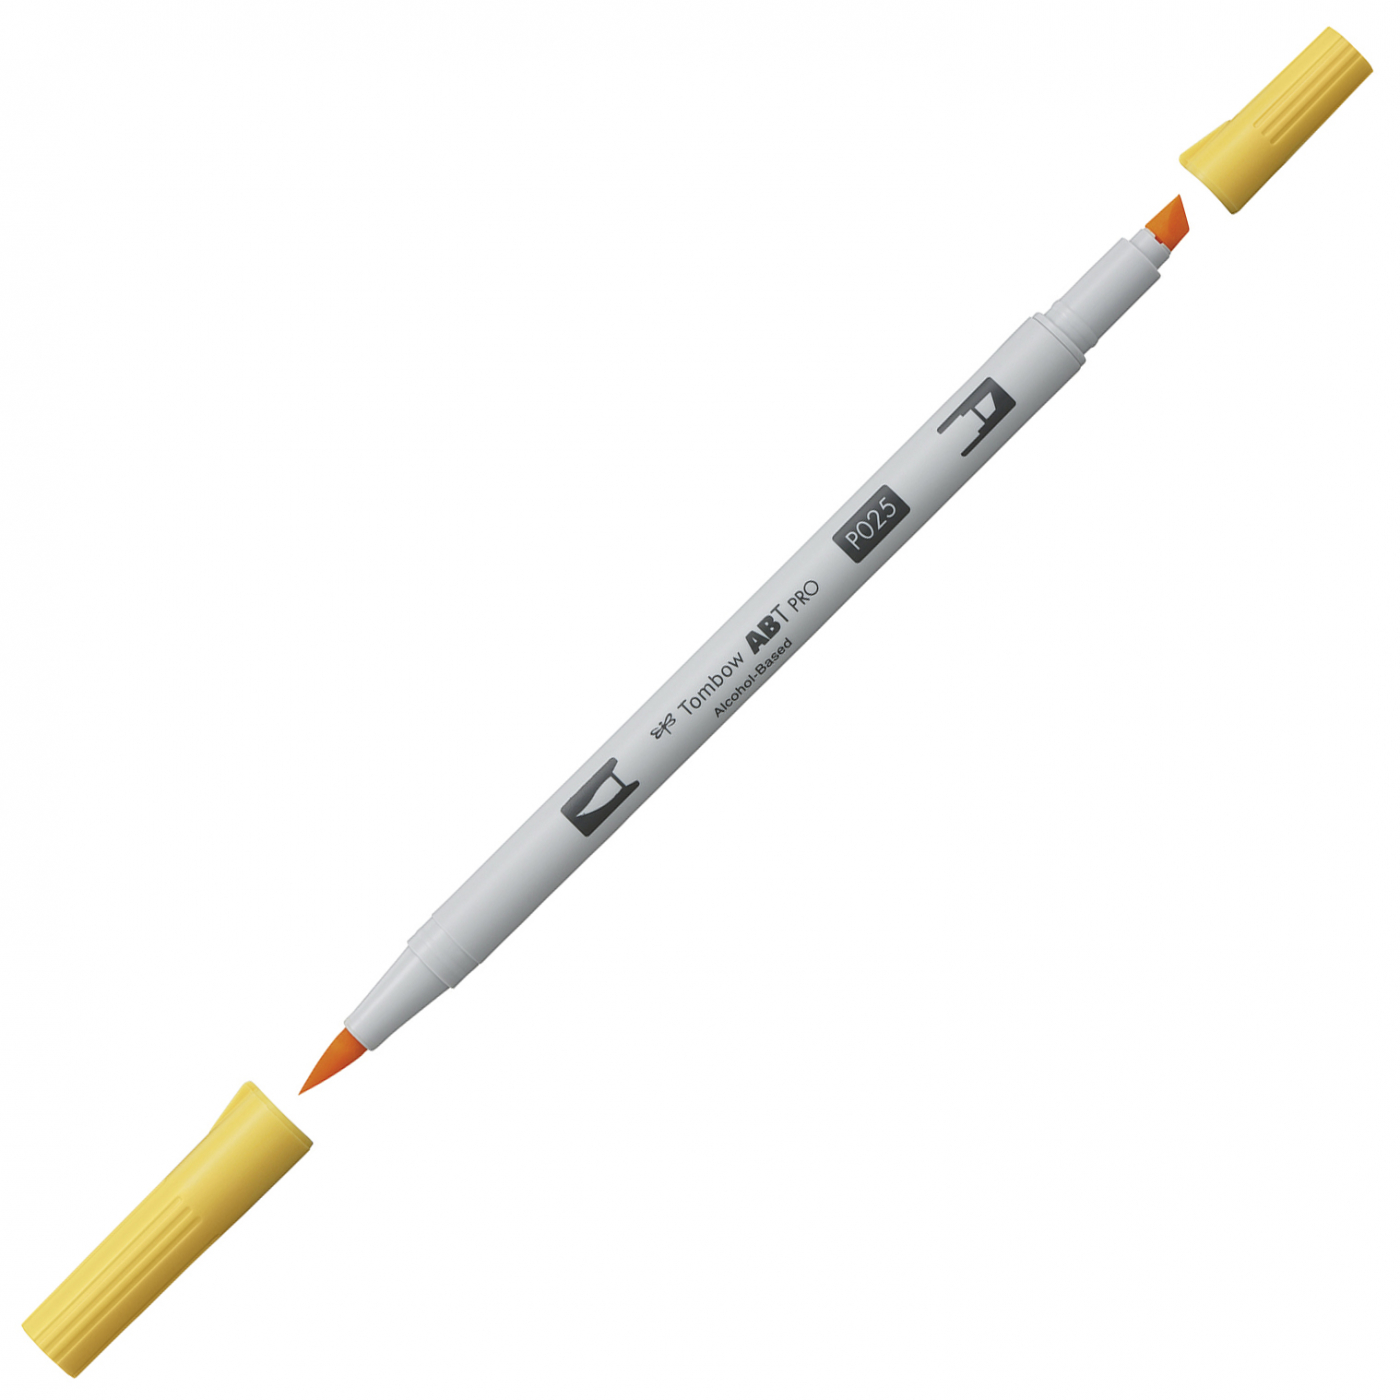 ABT PRO Dual Brush Pen 12-set Landscape in the group Pens / Artist Pens / Illustration Markers at Pen Store (125261)